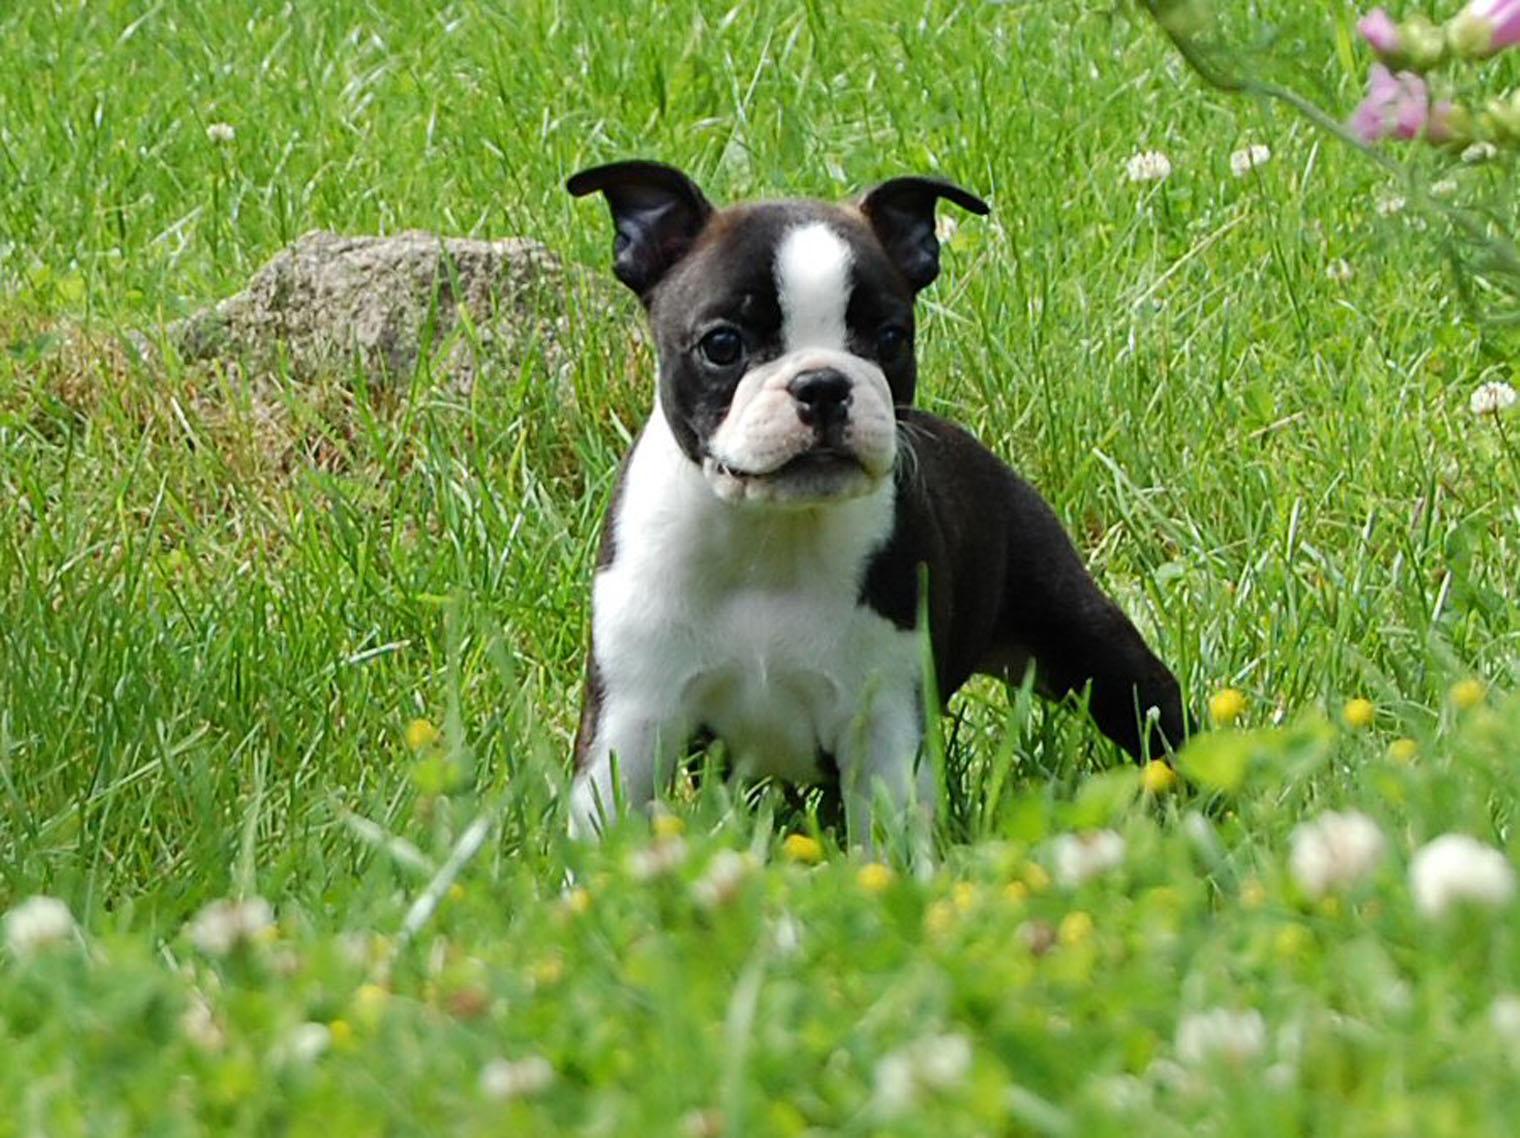 http://2.bp.blogspot.com/-JLgAonfTDeA/Th84WoC4fJI/AAAAAAAAALI/F3smvToFwUA/s1600/Boston+Terrier+Dogs+Wallpapers+2.jpg